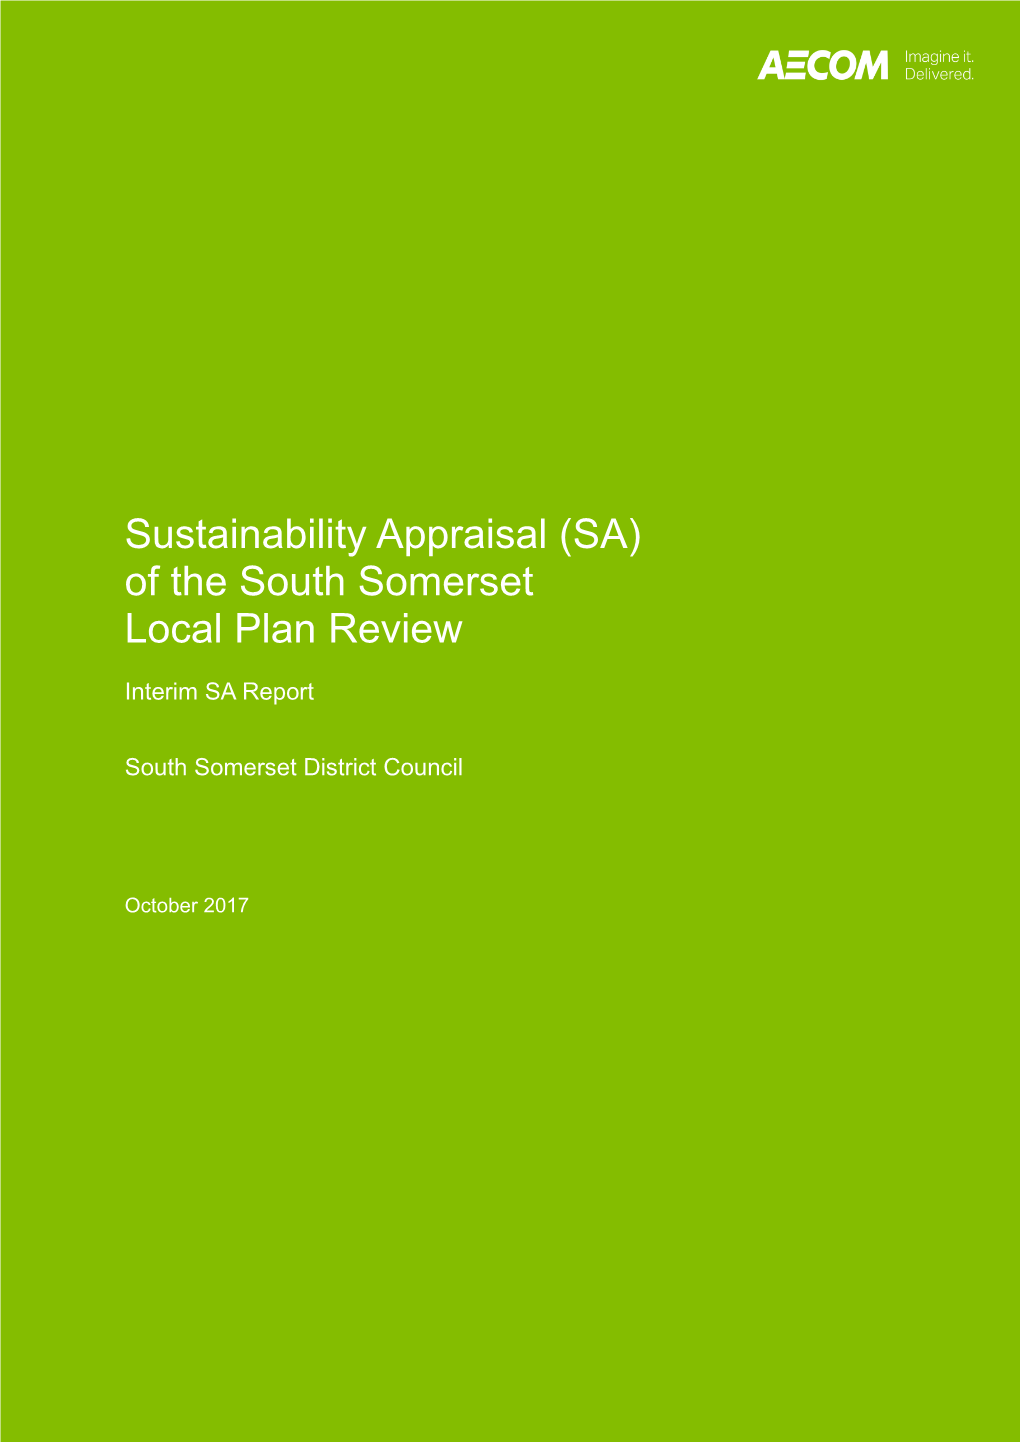 Sustainability Appraisal Interim Report